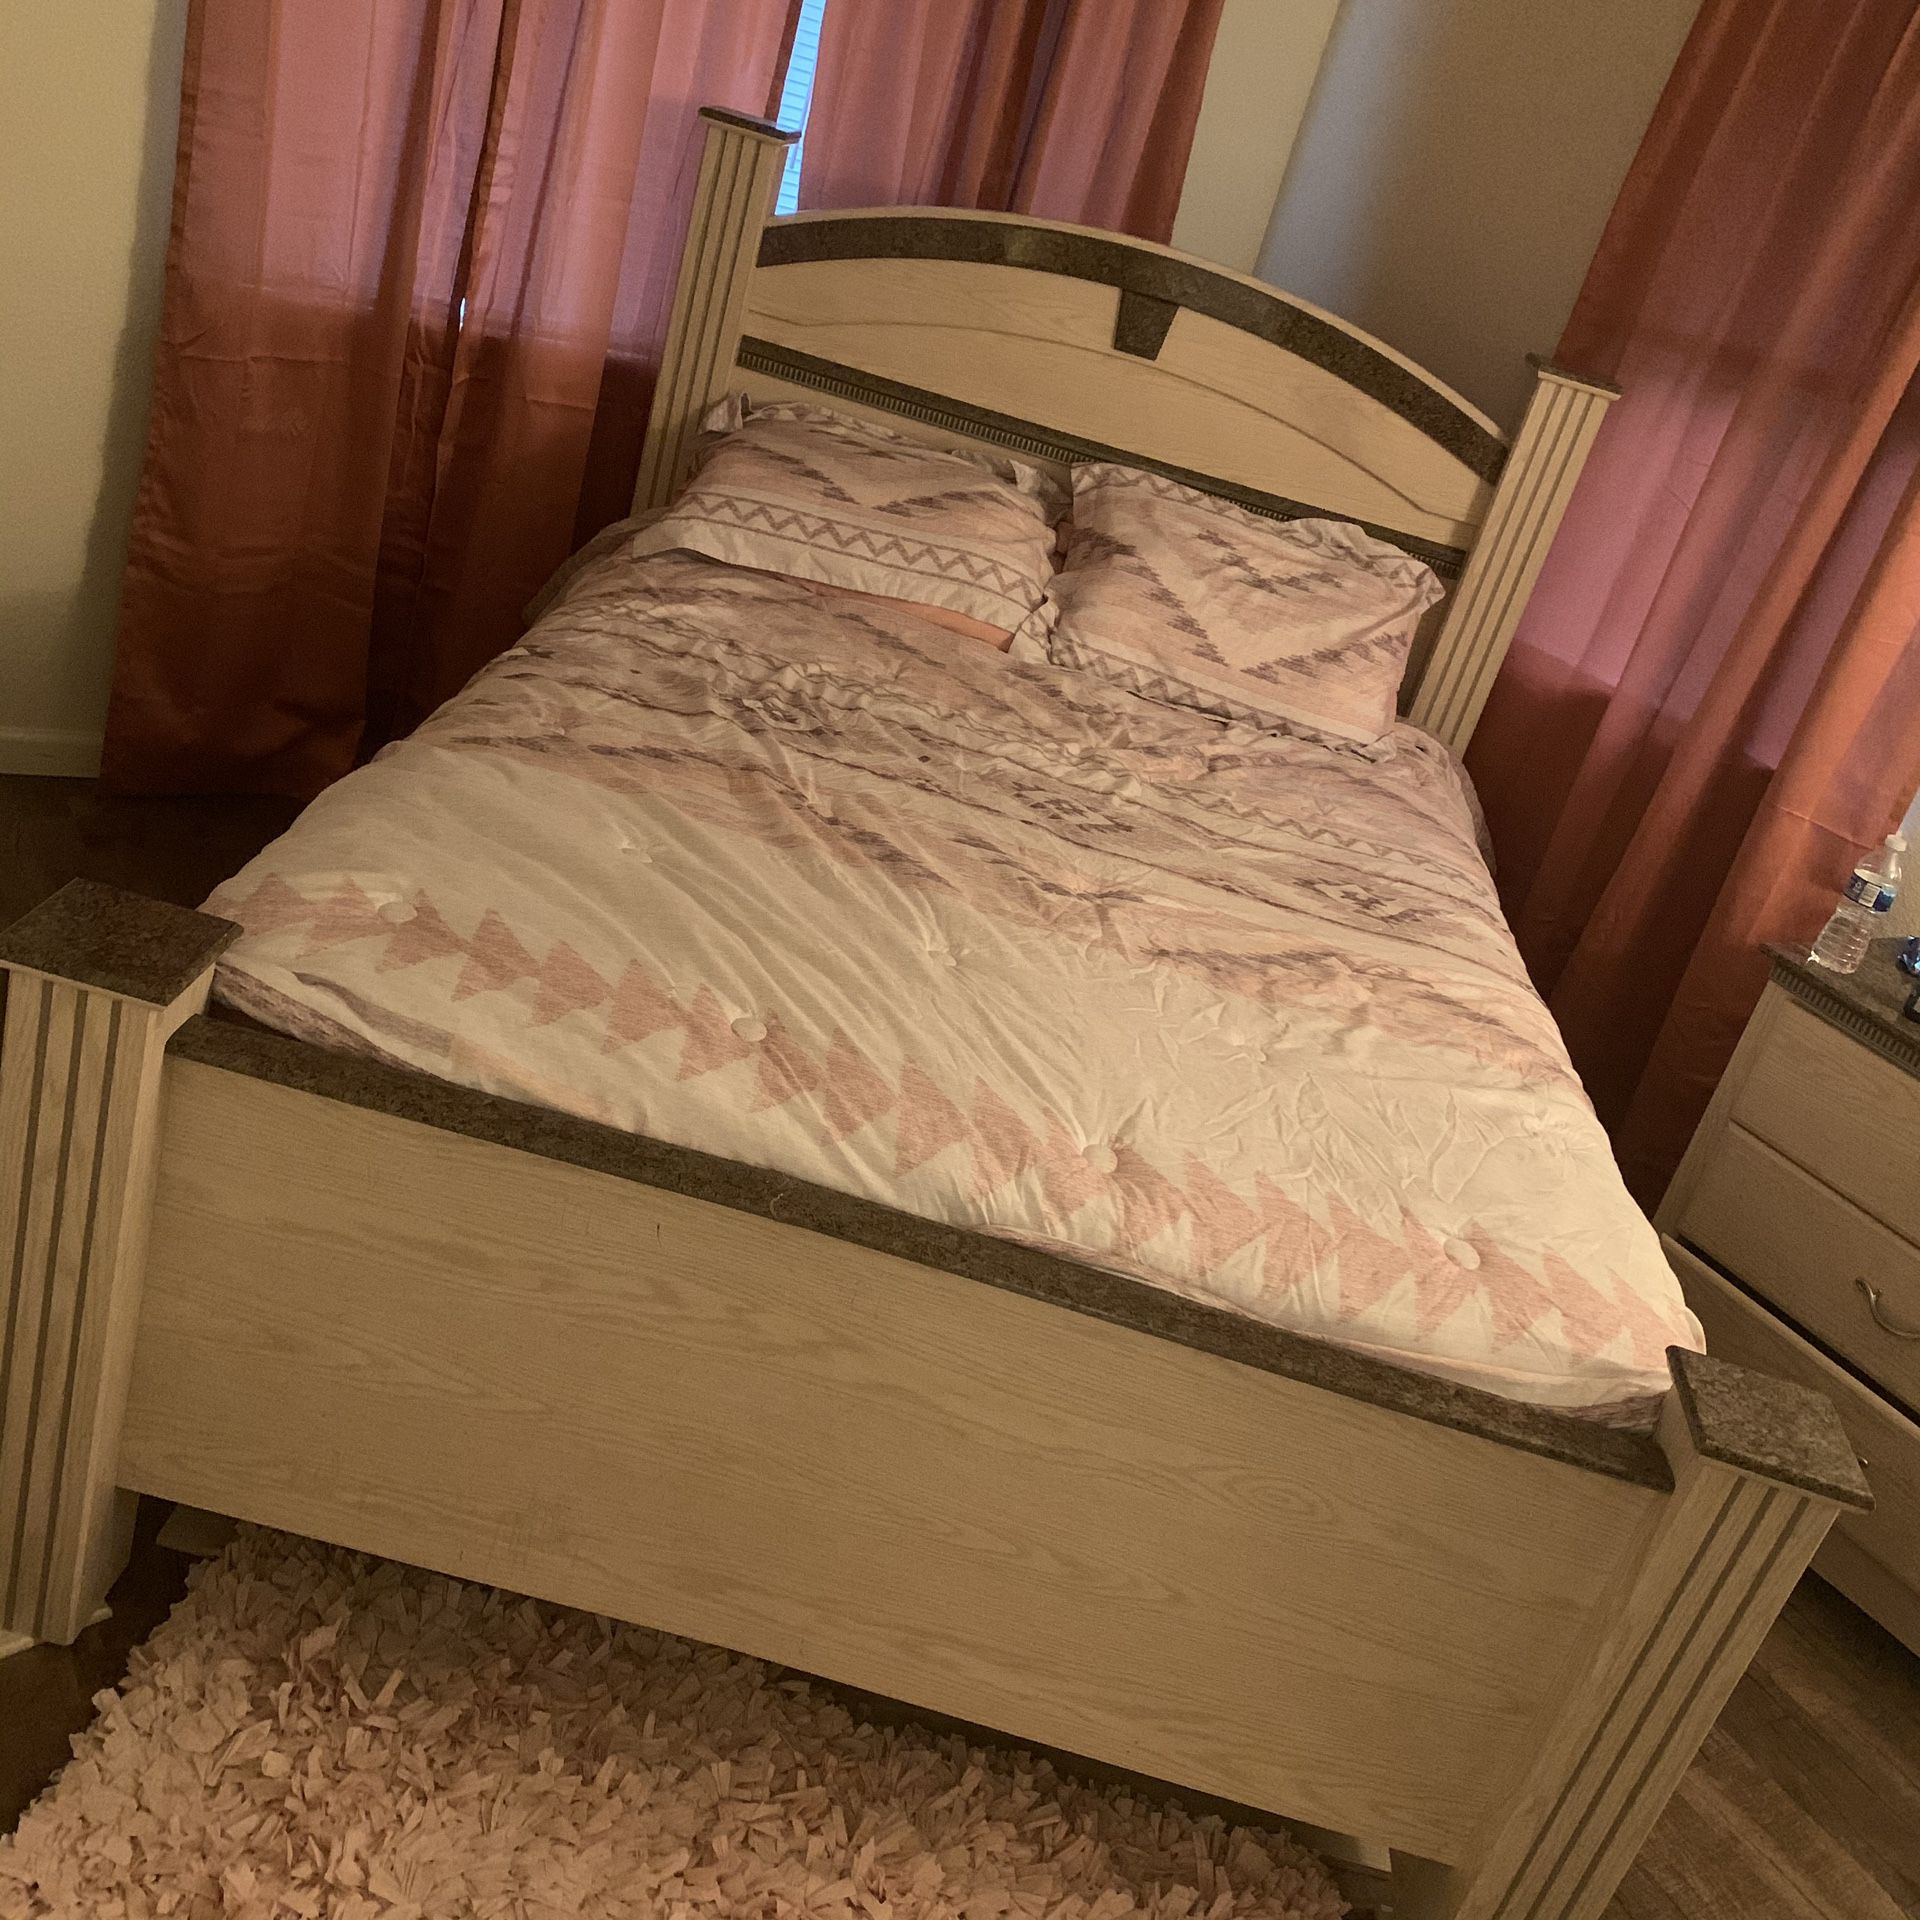 Queen Size bed set